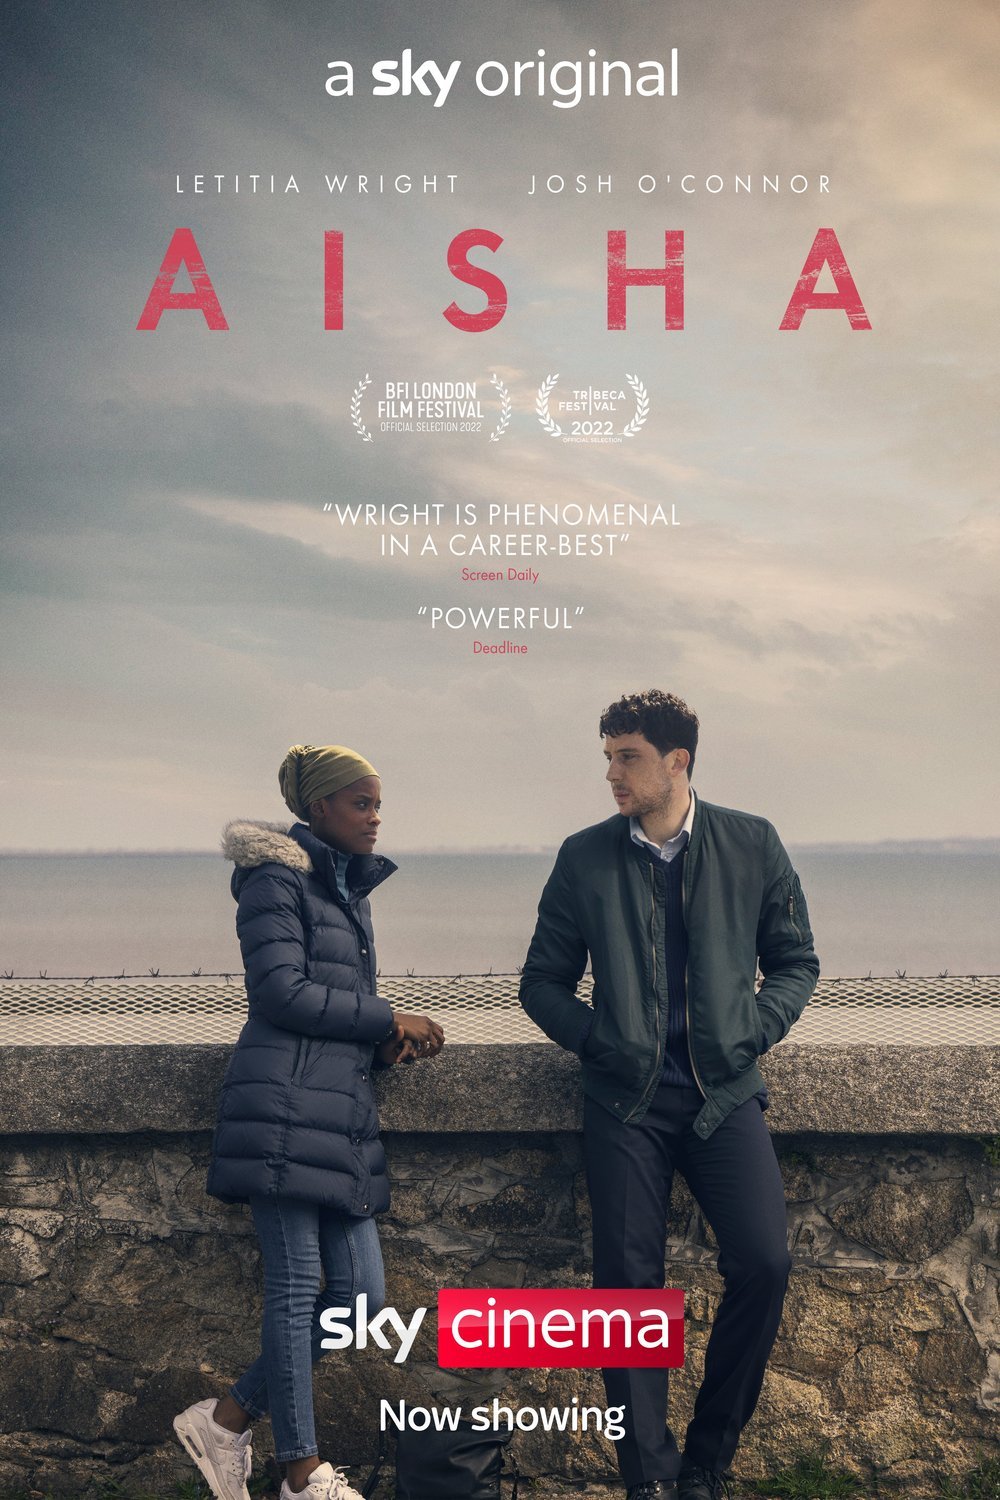 Poster of the movie Aisha